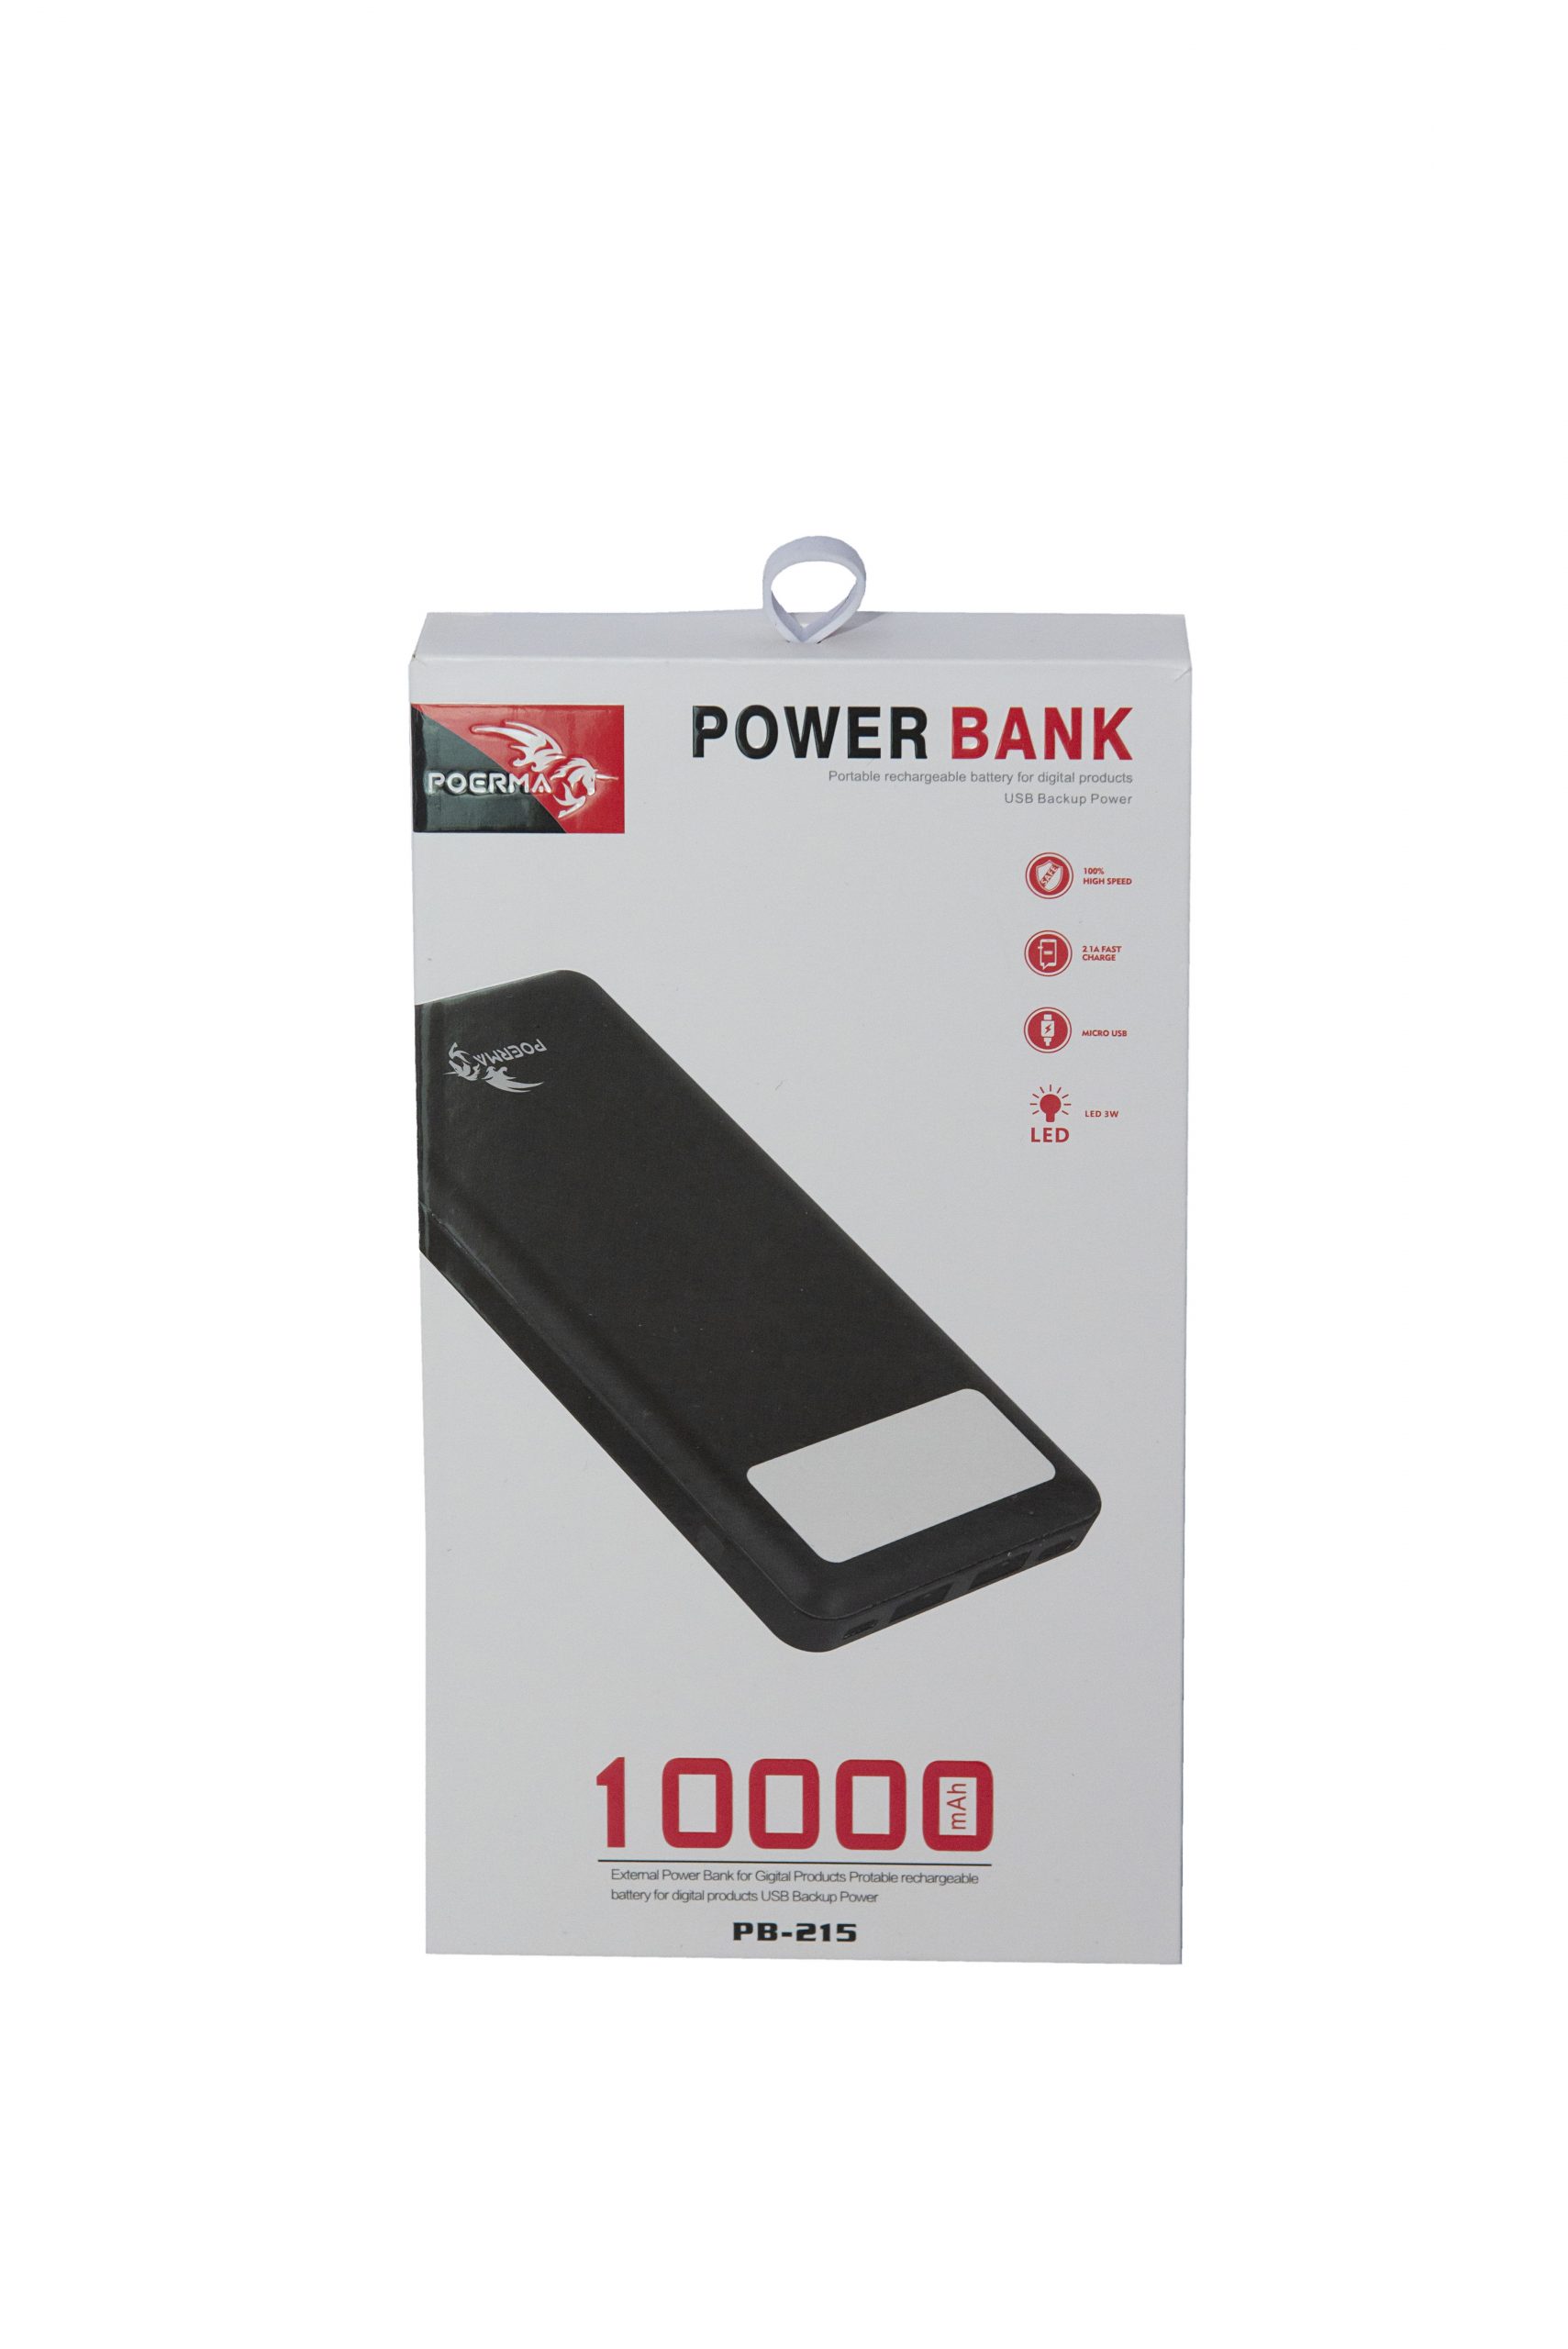 Powerbank_PB15_BOX VIEW